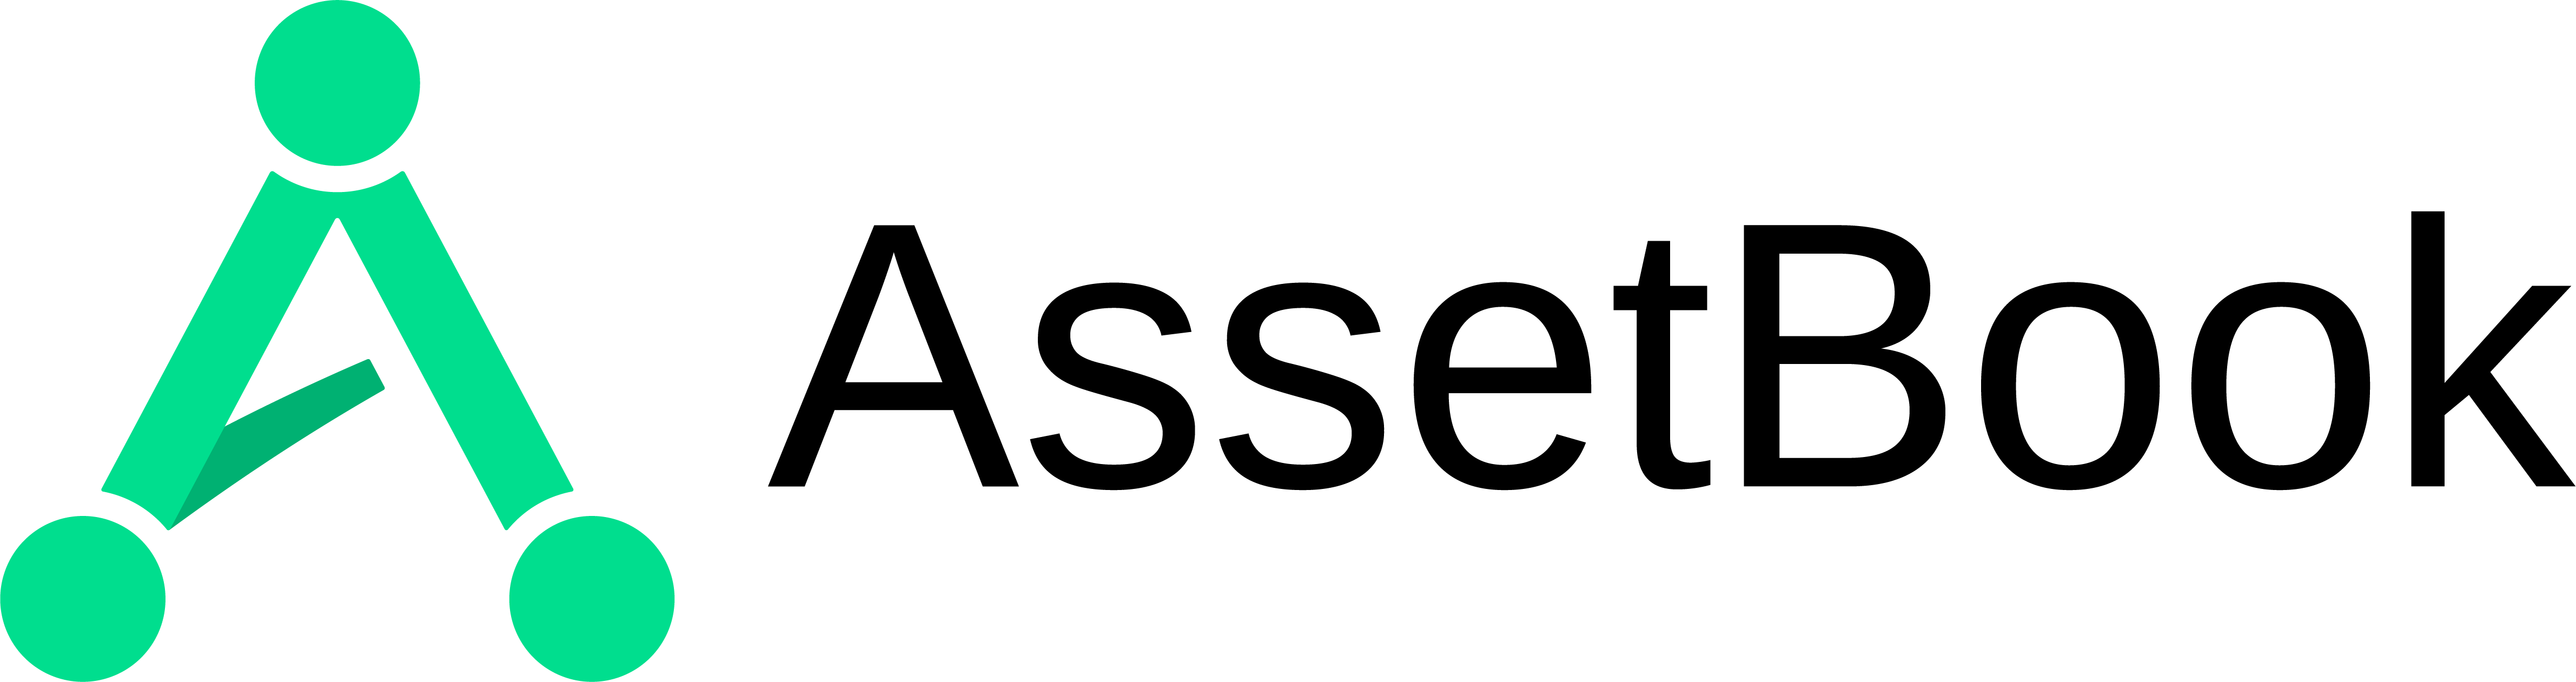 AssetBook logo